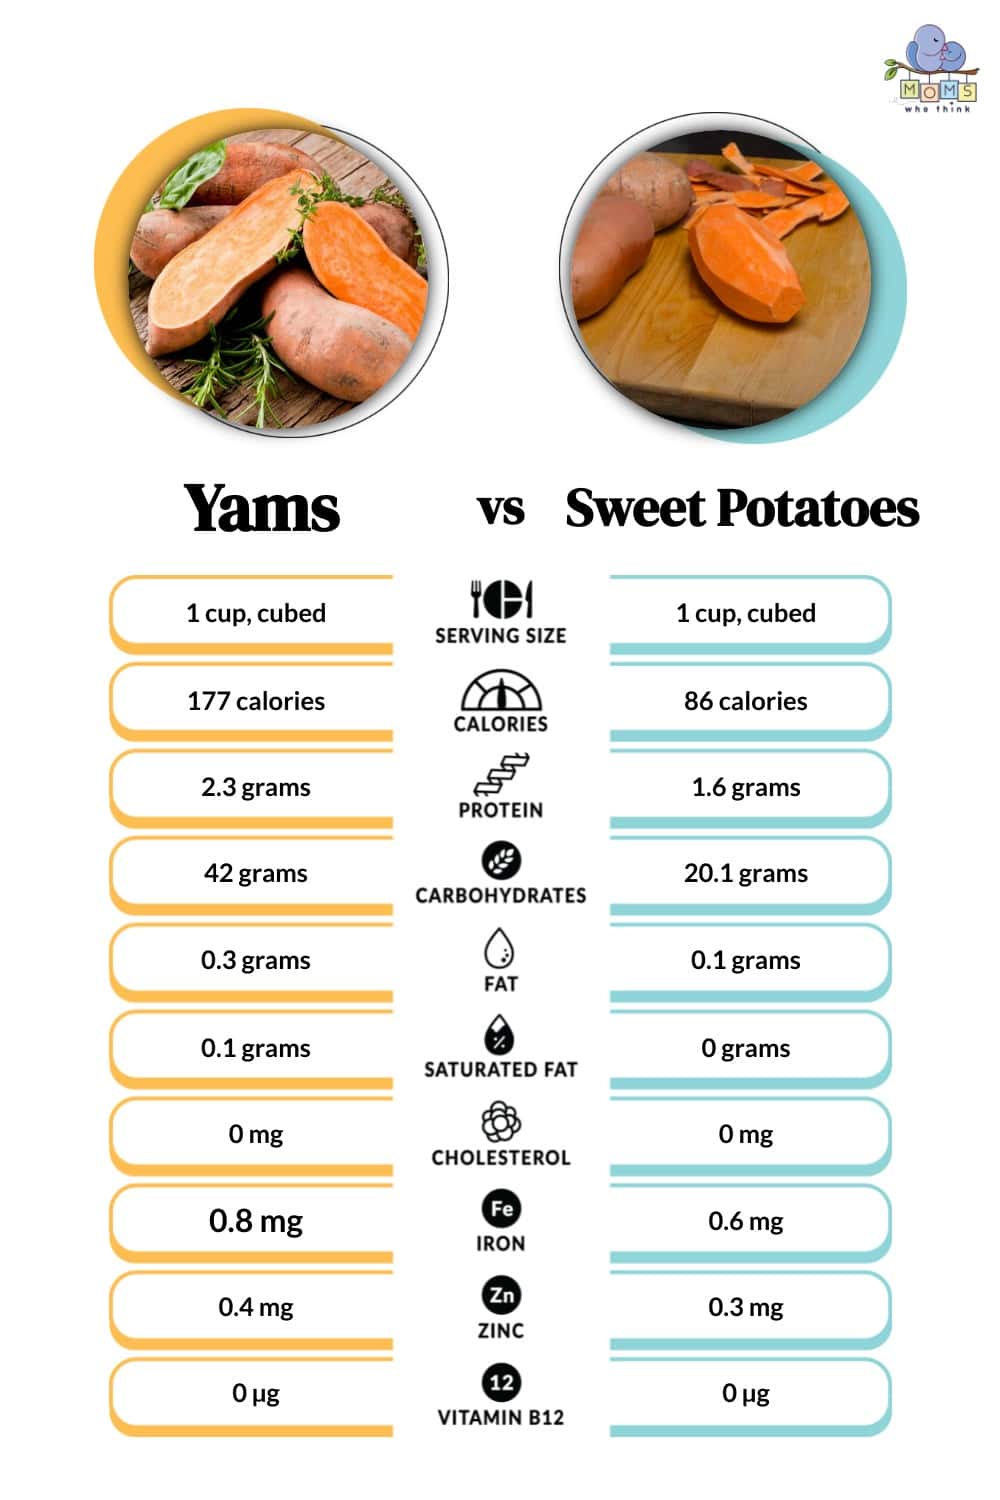 Yams vs Sweet Potatoes Nutritional Facts